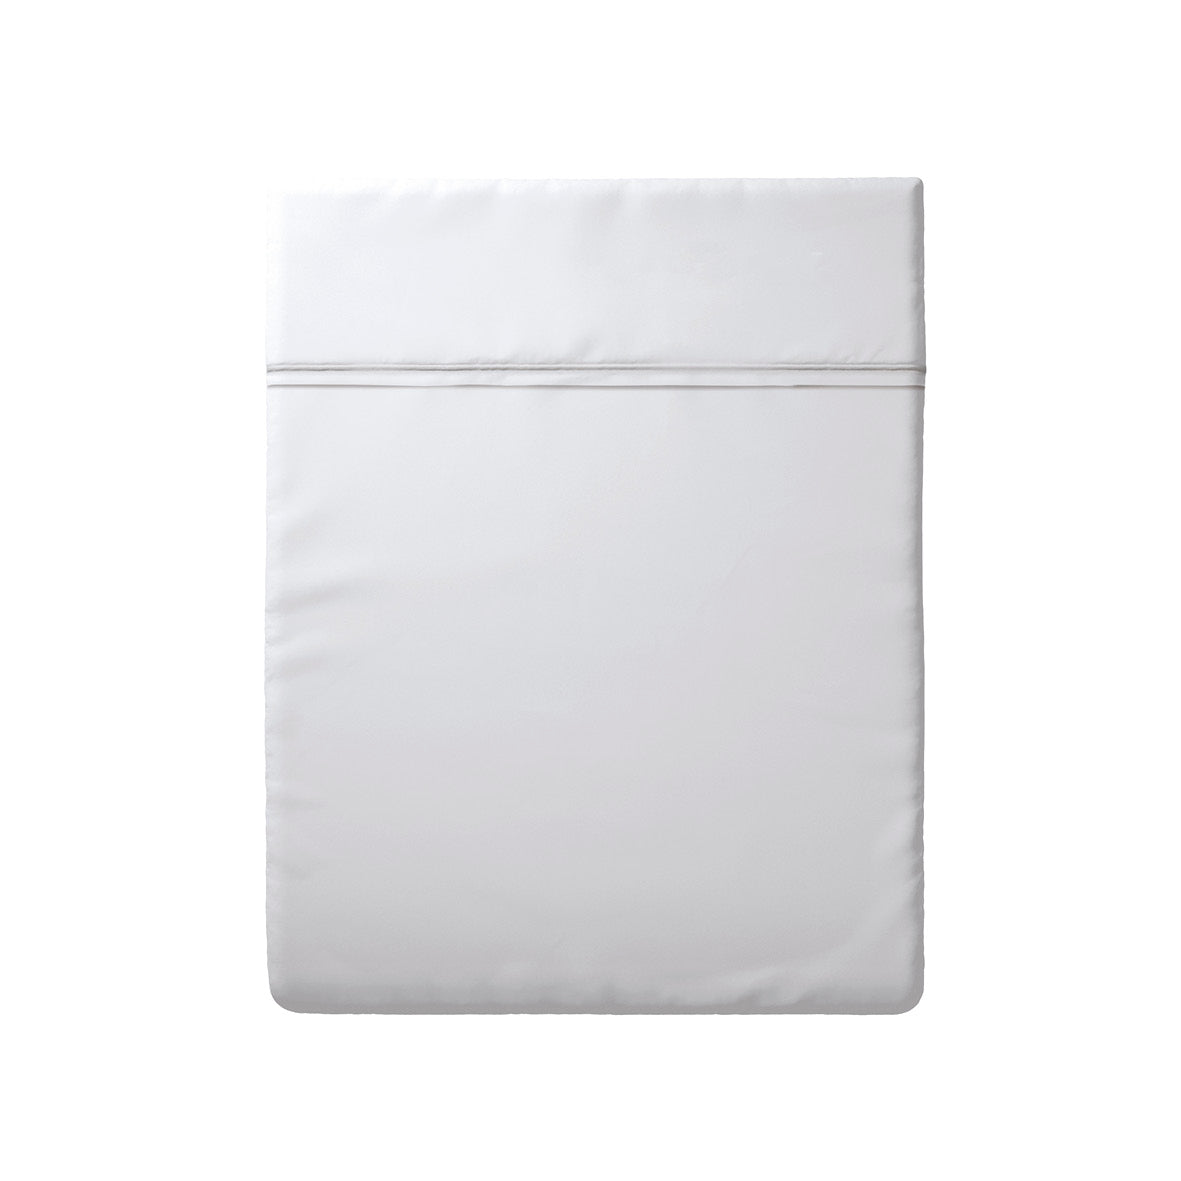 Flat sheet cotton satin - White